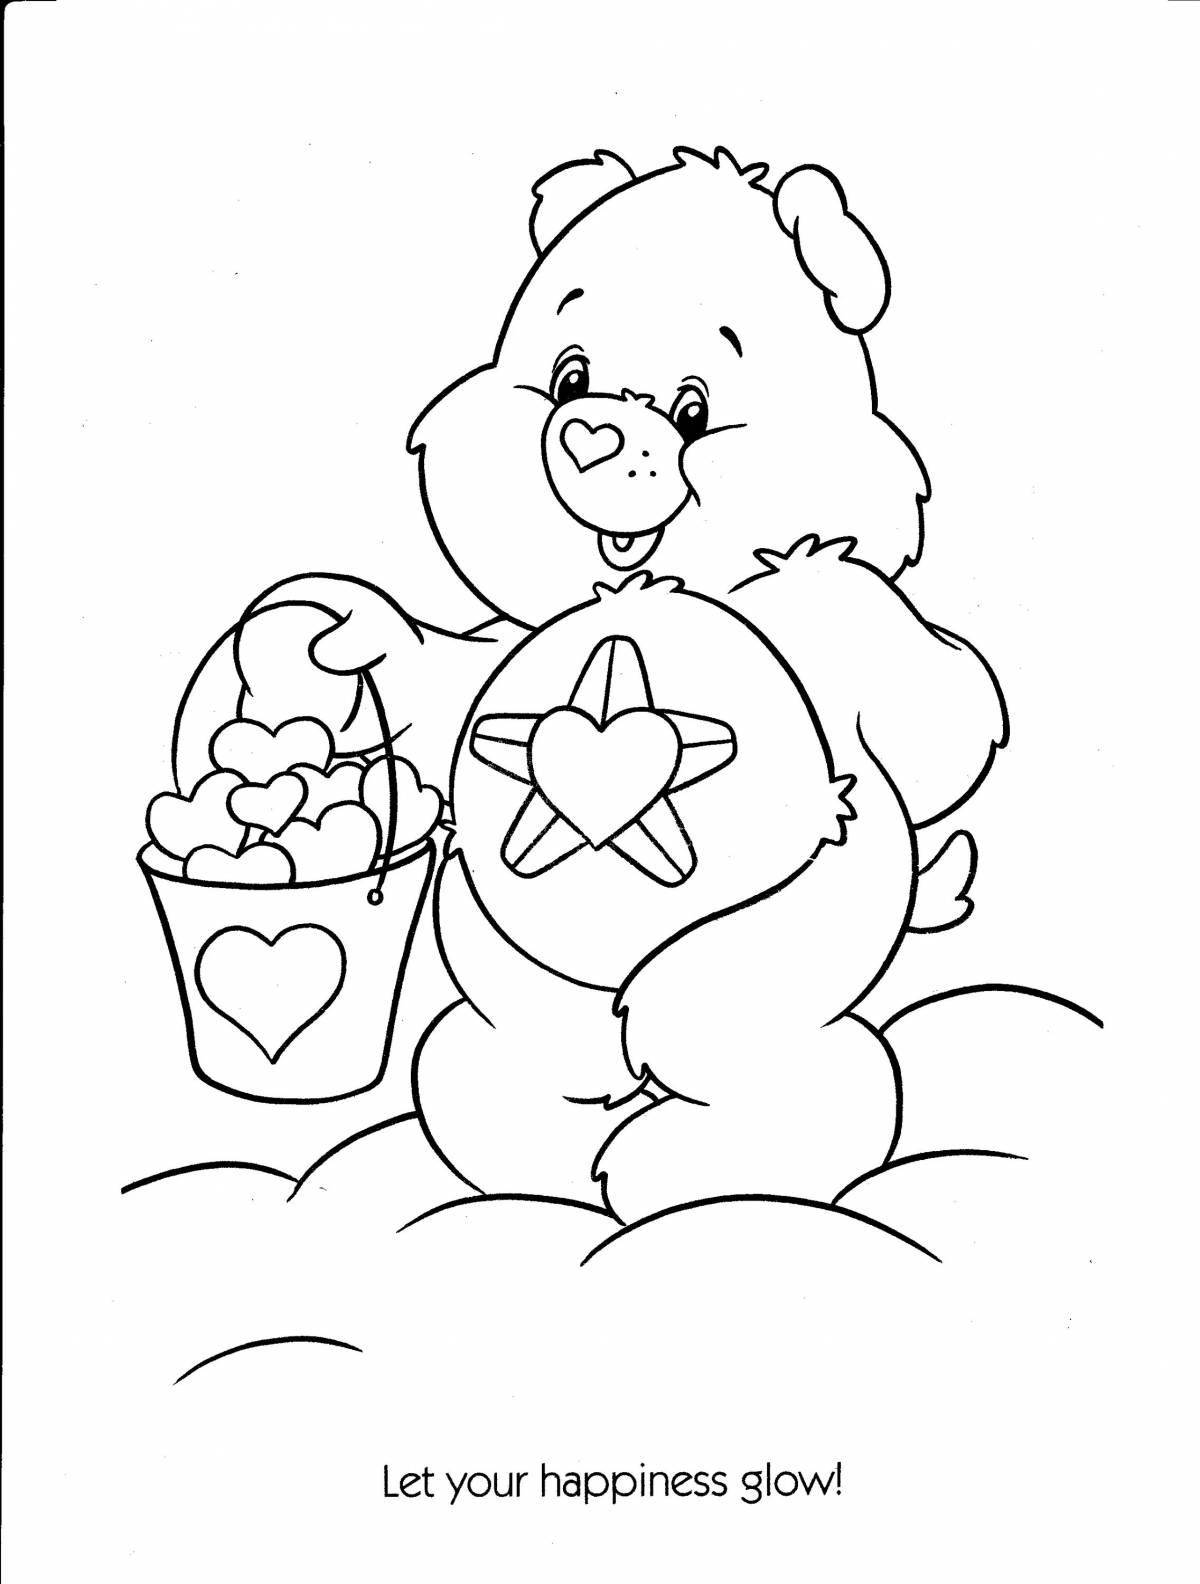 Coloring book playful teddy bear